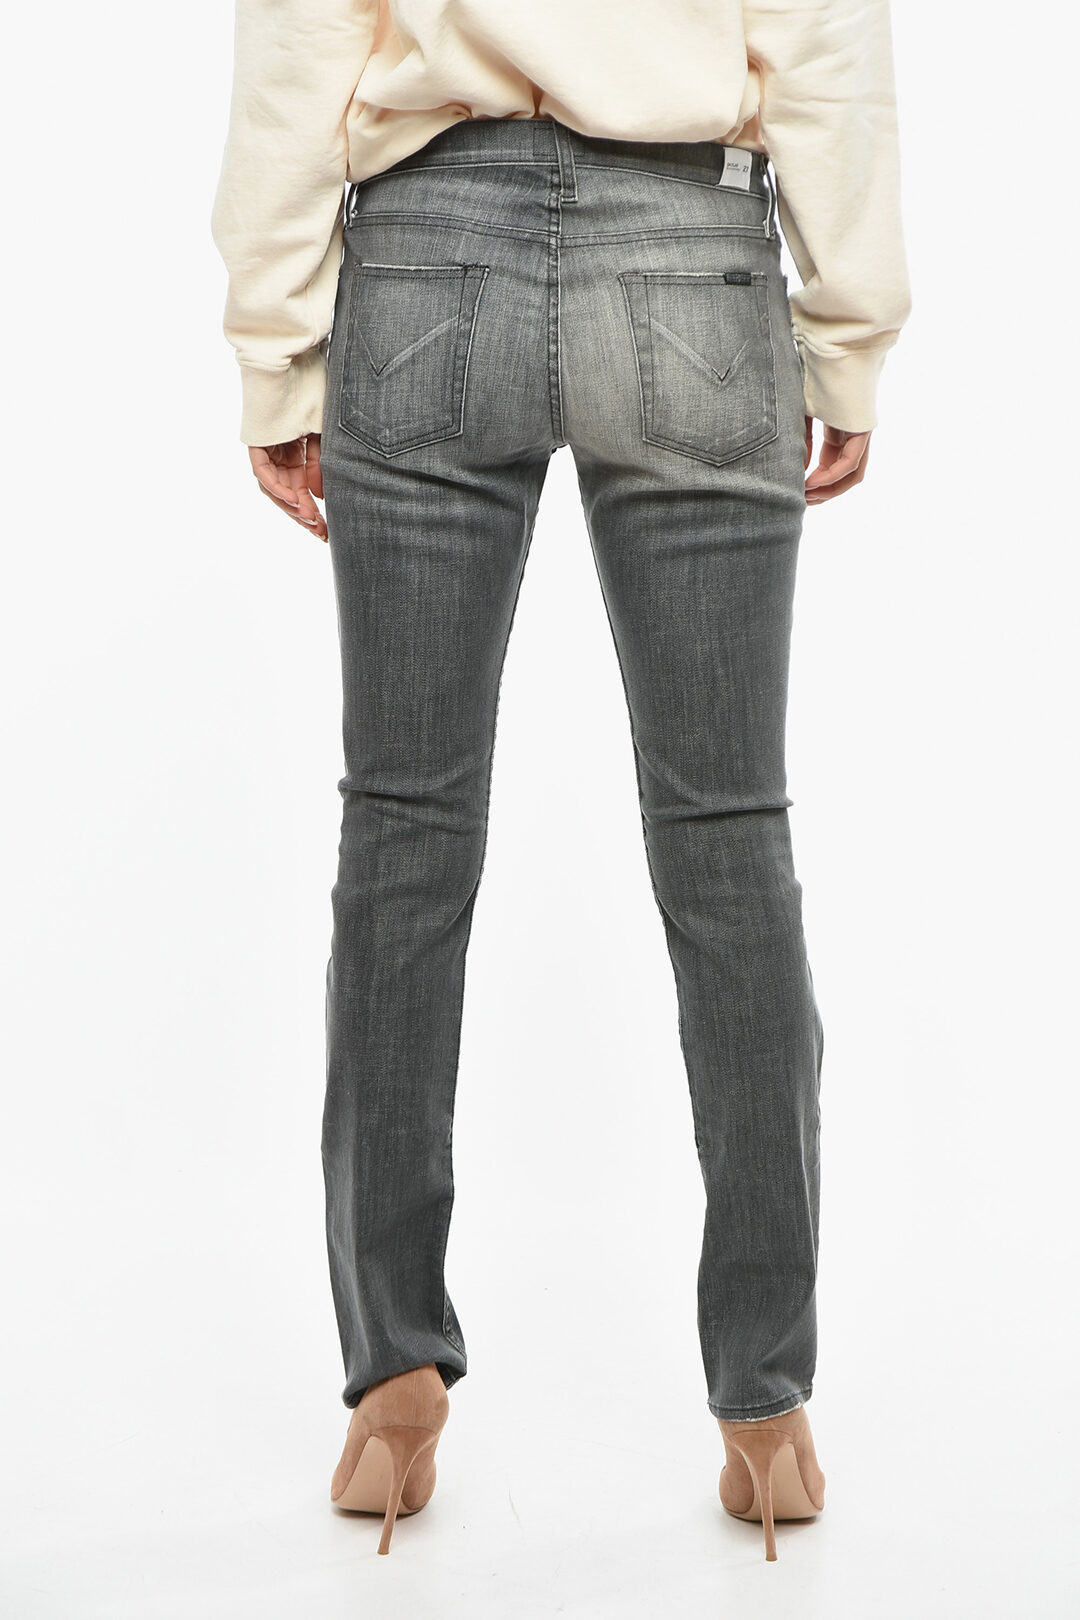 https://data.glamood.com/imgprodotto/stretch-cotton-slim-fit-skylar-jeans-17cm_1429353_zoom.jpg